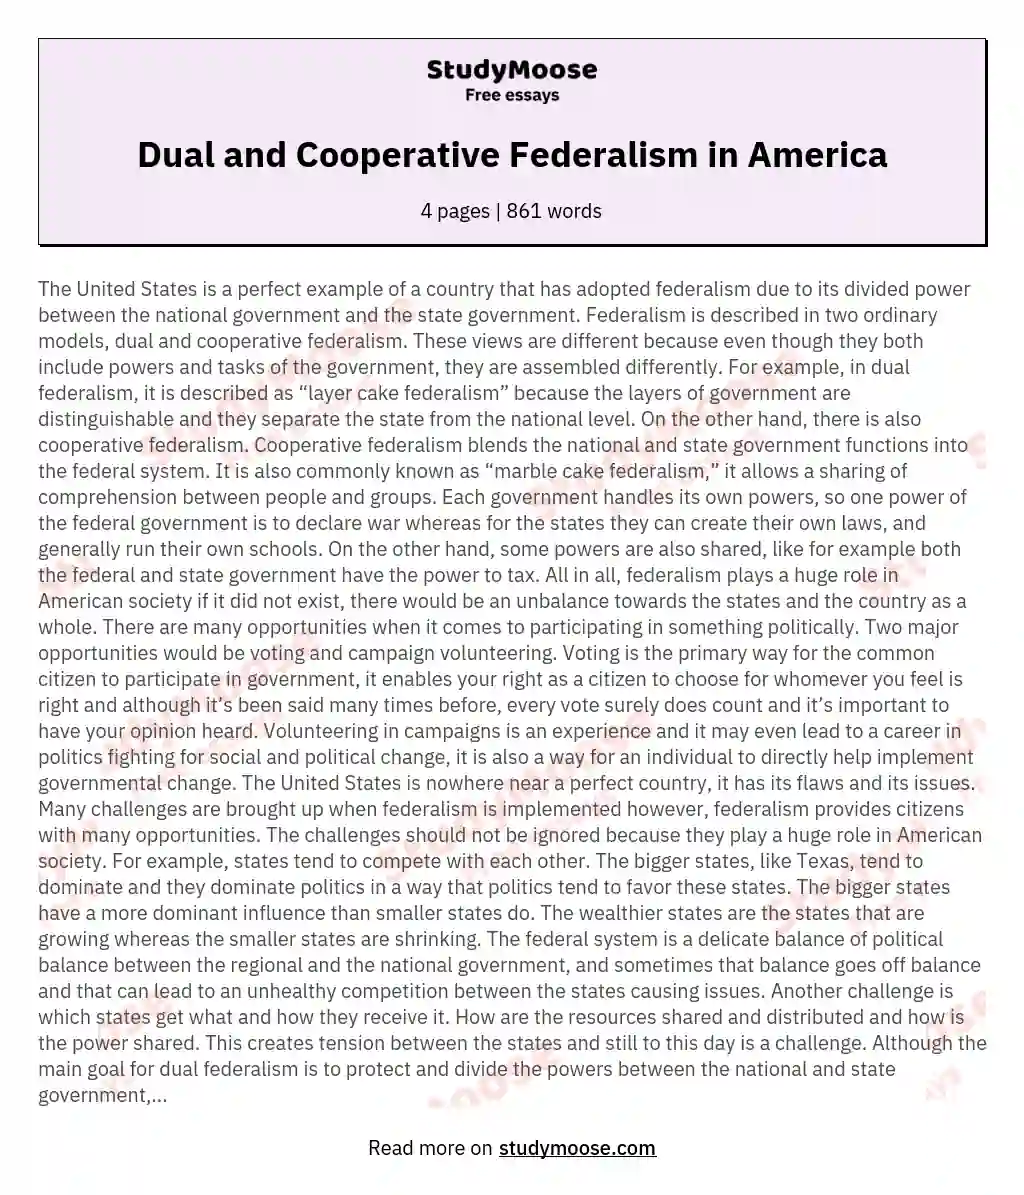 Dual and Cooperative Federalism in America